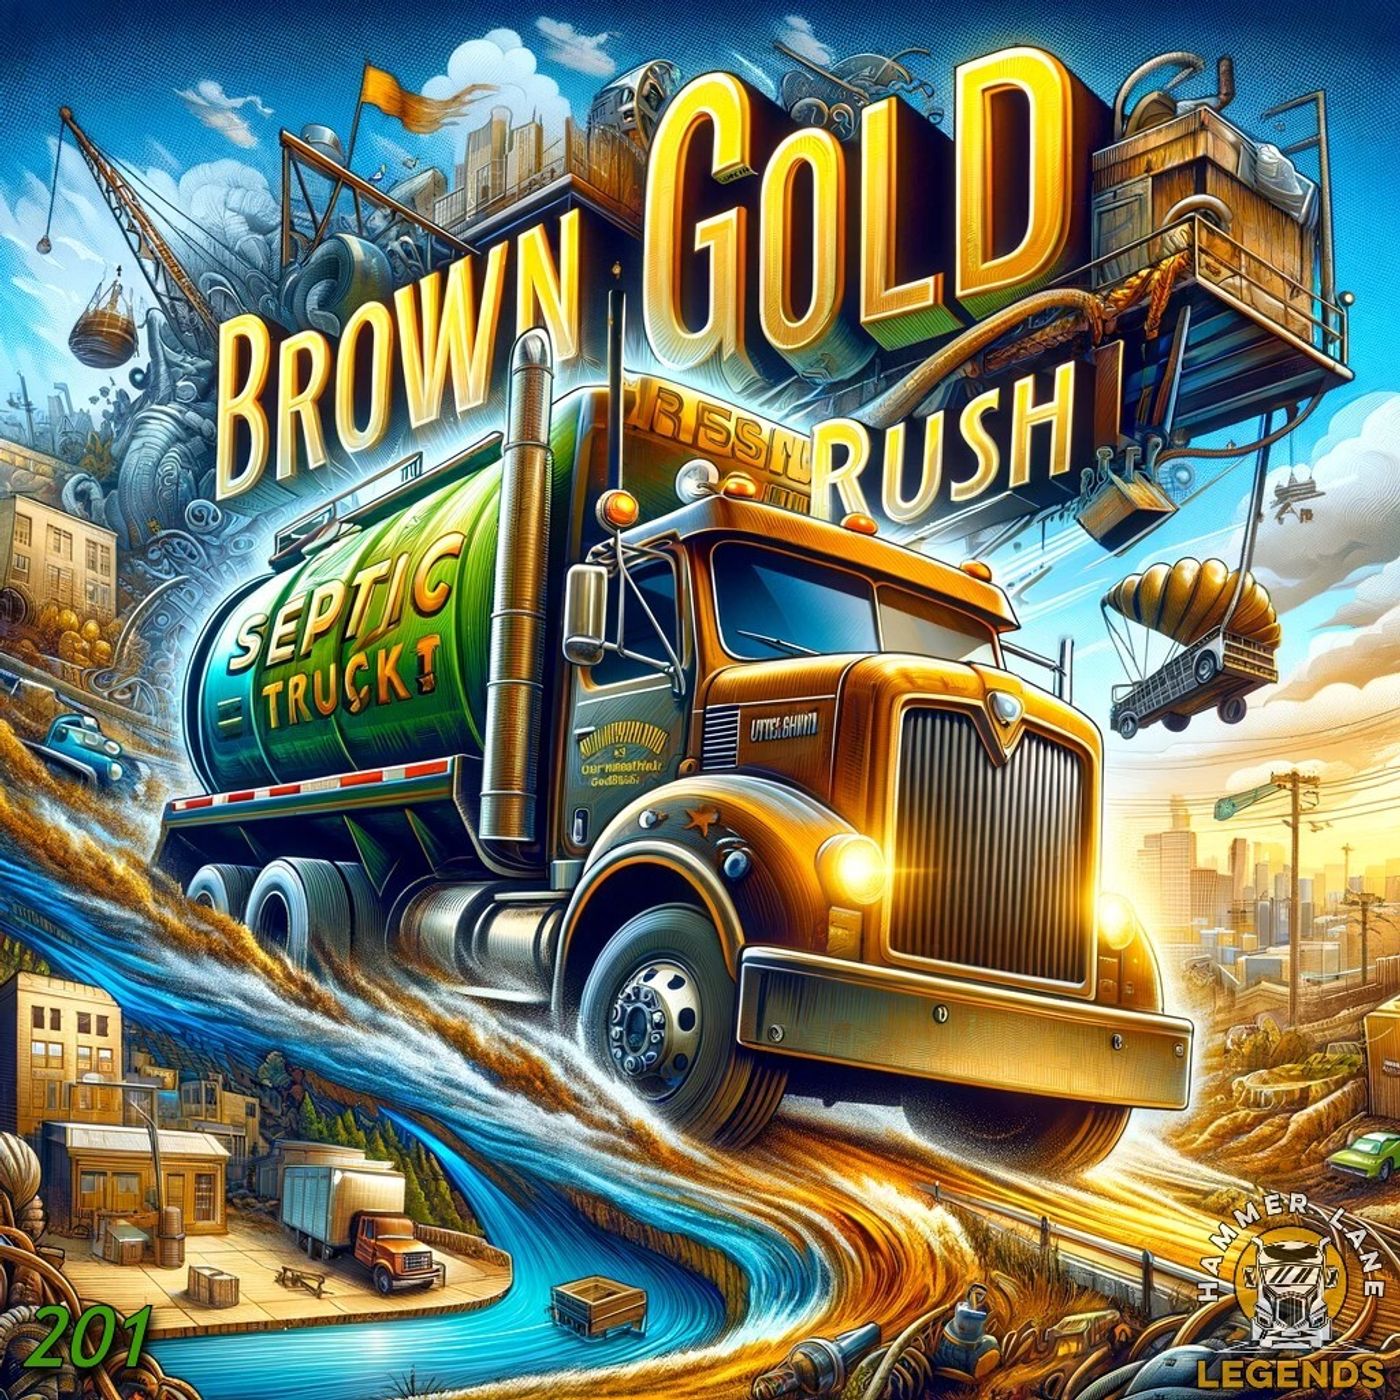 201: (Brown) Gold Rush